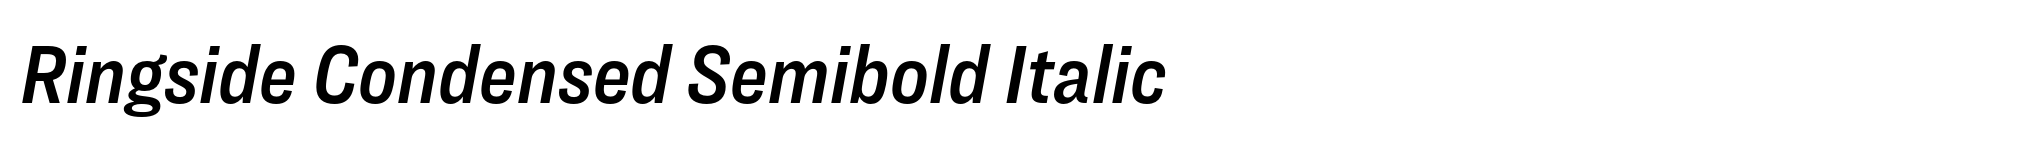 Ringside Condensed Semibold Italic image